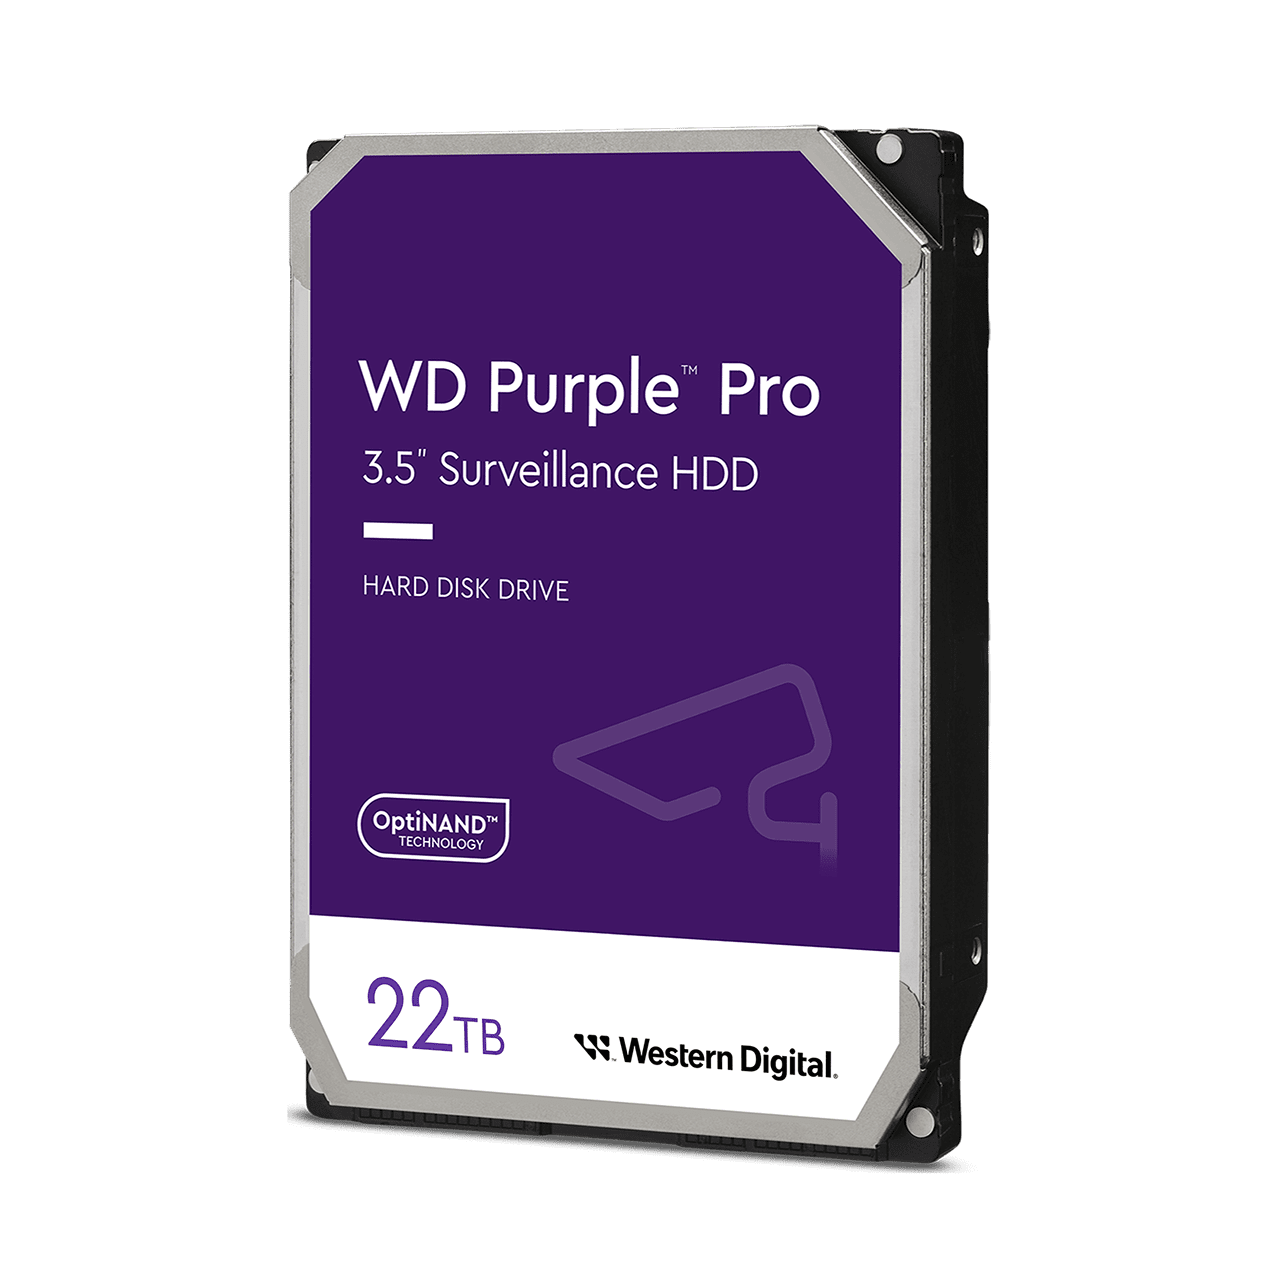 wd-purple-pro-sata-hdd-22tb-angle.png.thumb.1280.1280